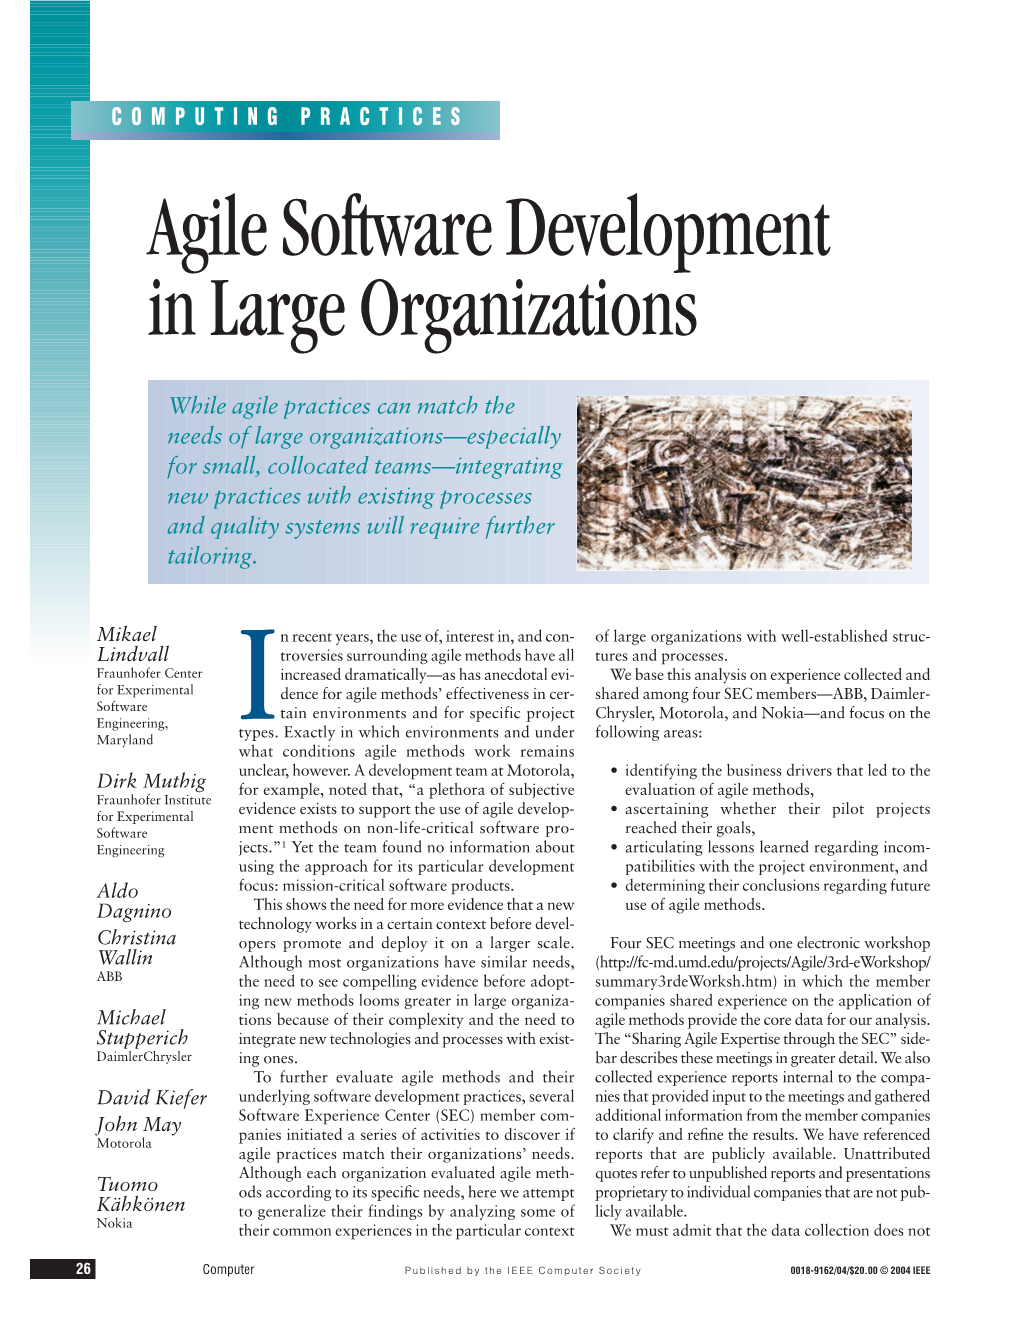 Agile Software Development in Large Organizations